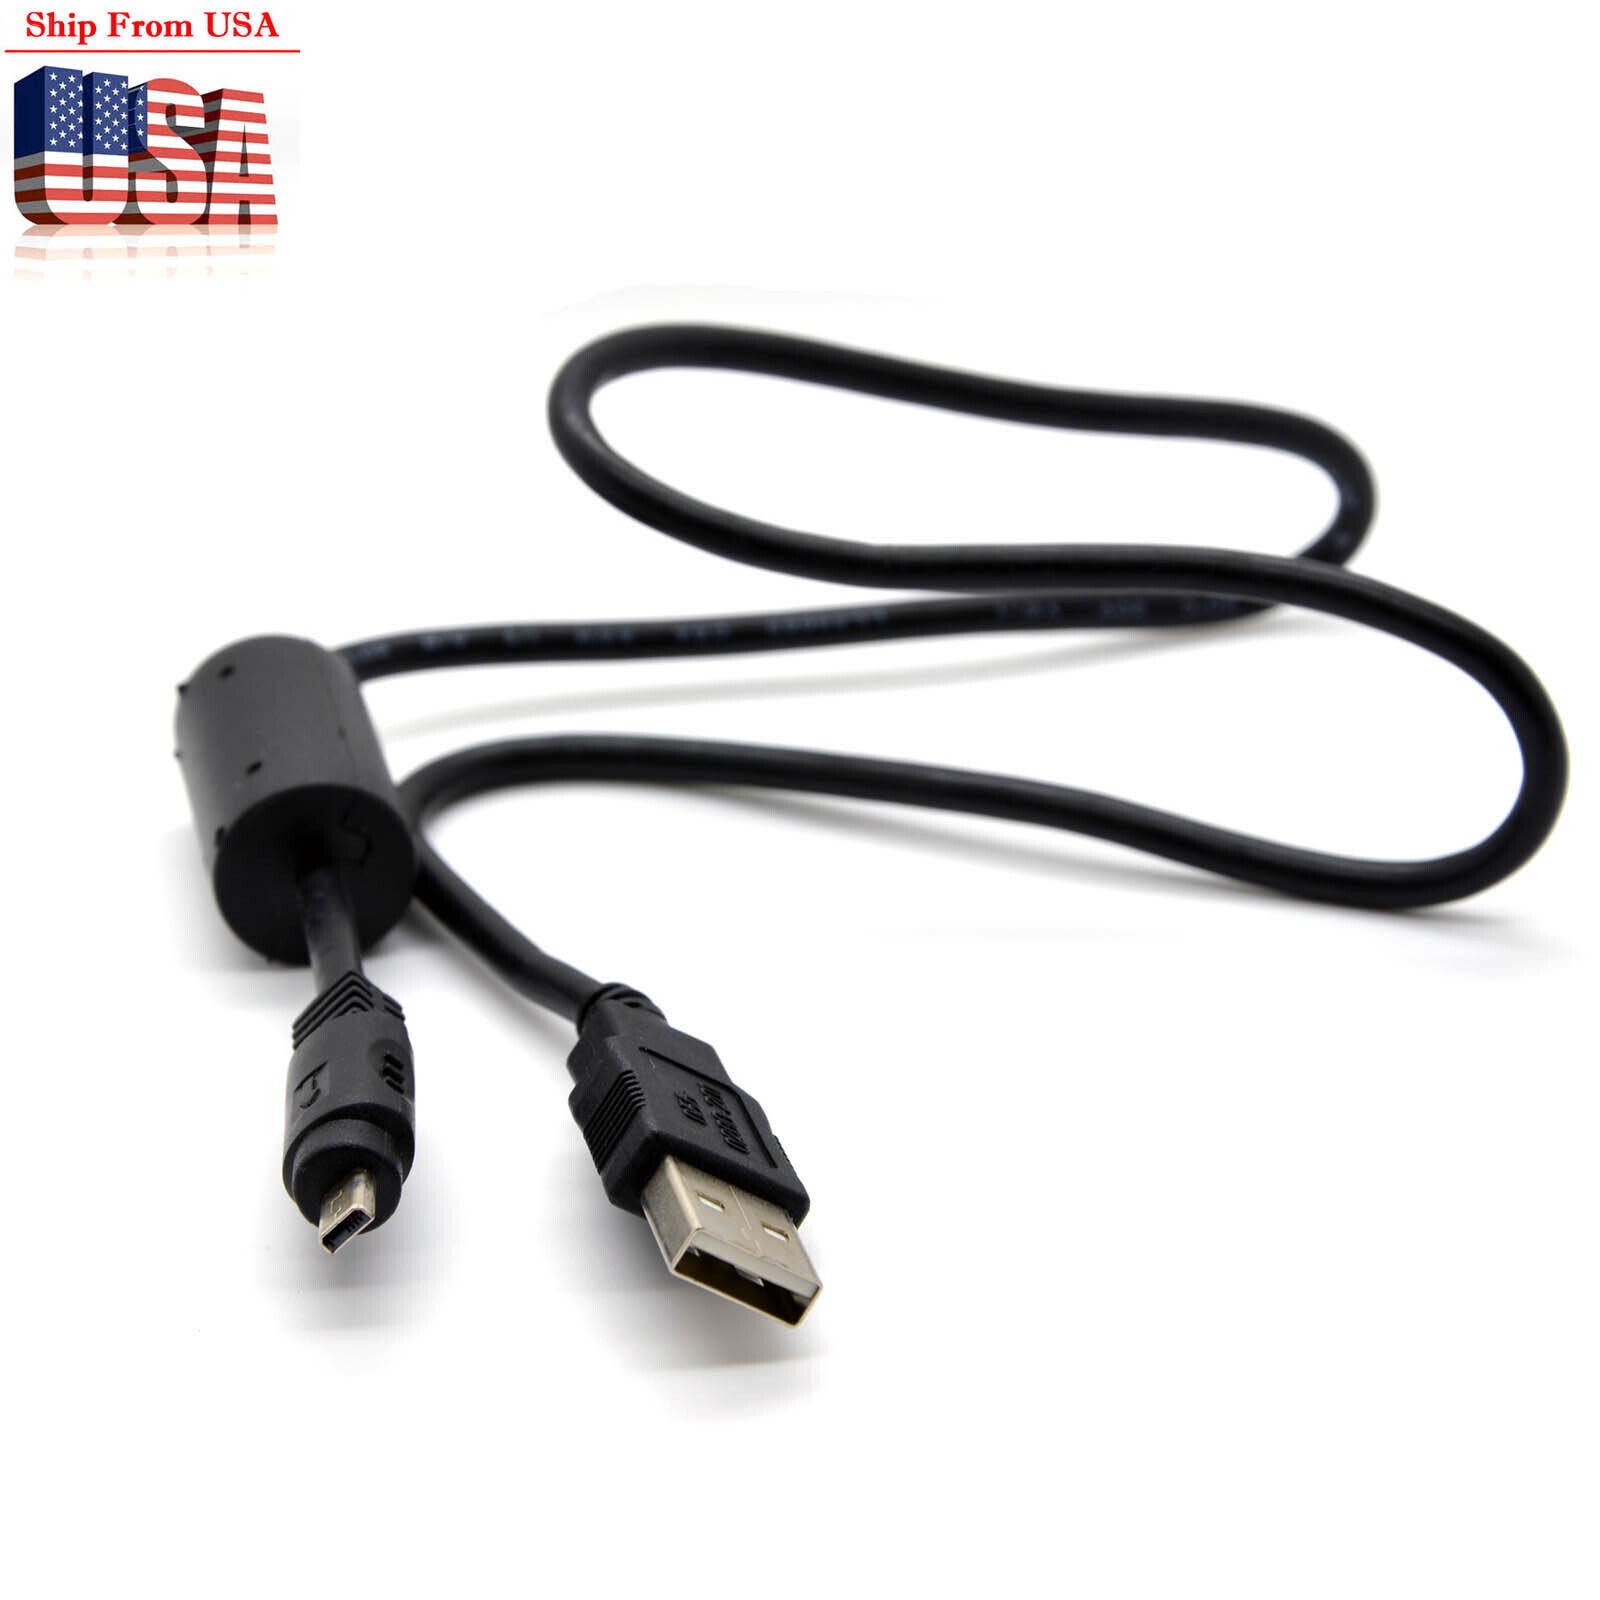 beton Normaal gesproken Soepel Sync Data USB Cable Cord Lead For Panasonic Lumix DMC-FS4 DMC-FS5 DMC-FS6  Camera | eBay